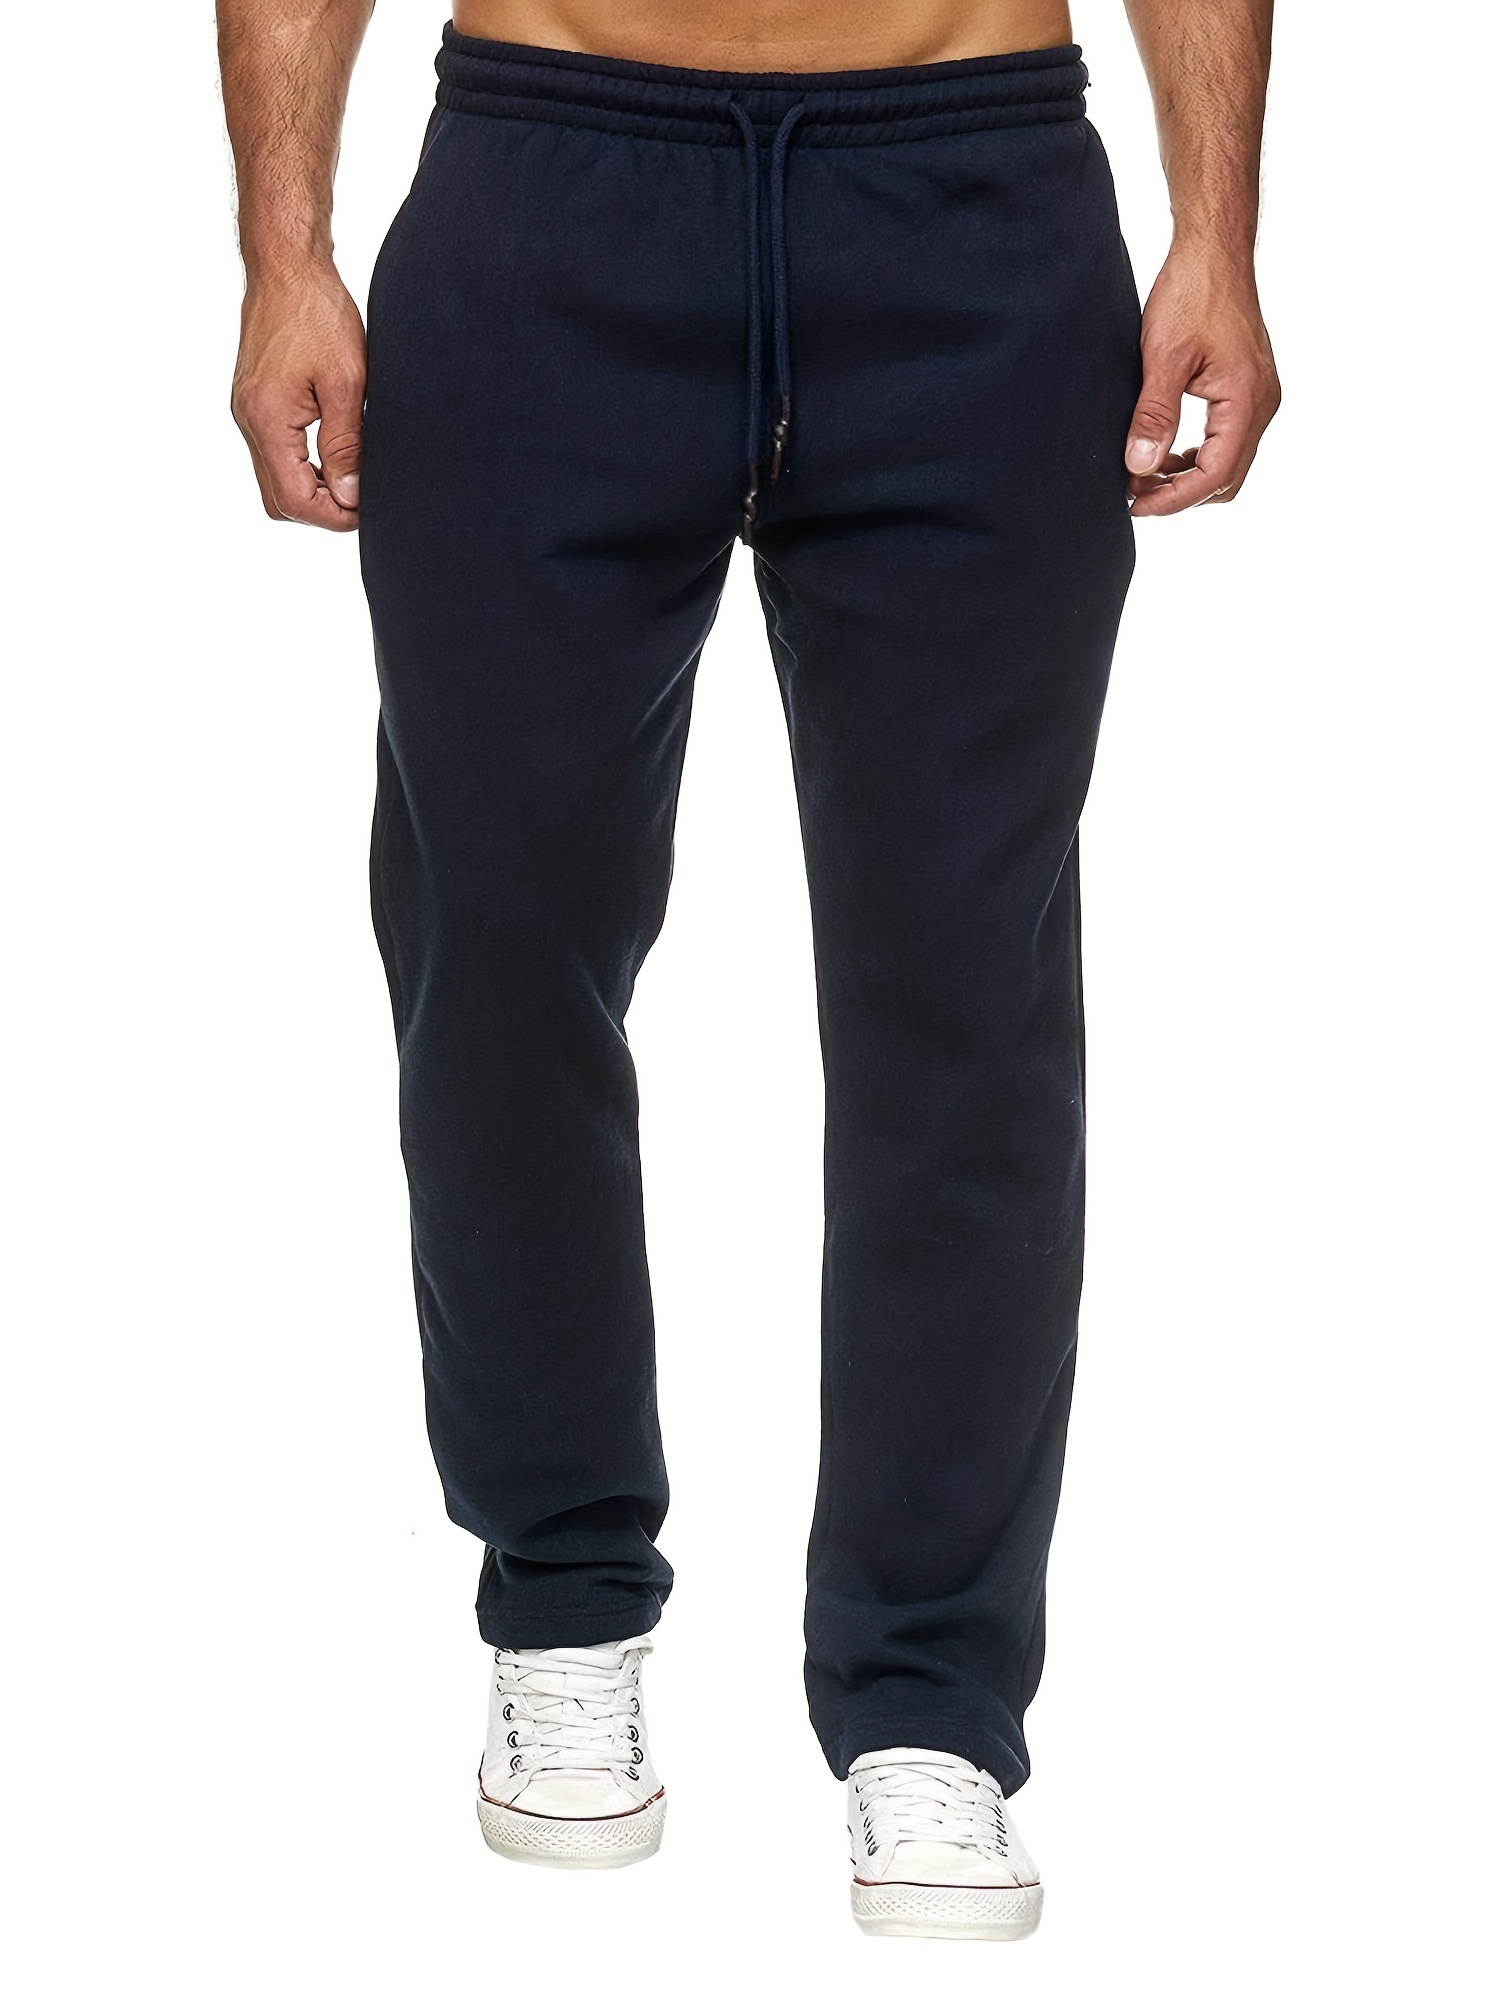 Sweat Pants Plus Size Casual Solid Color Comfy Low Rise Pants for